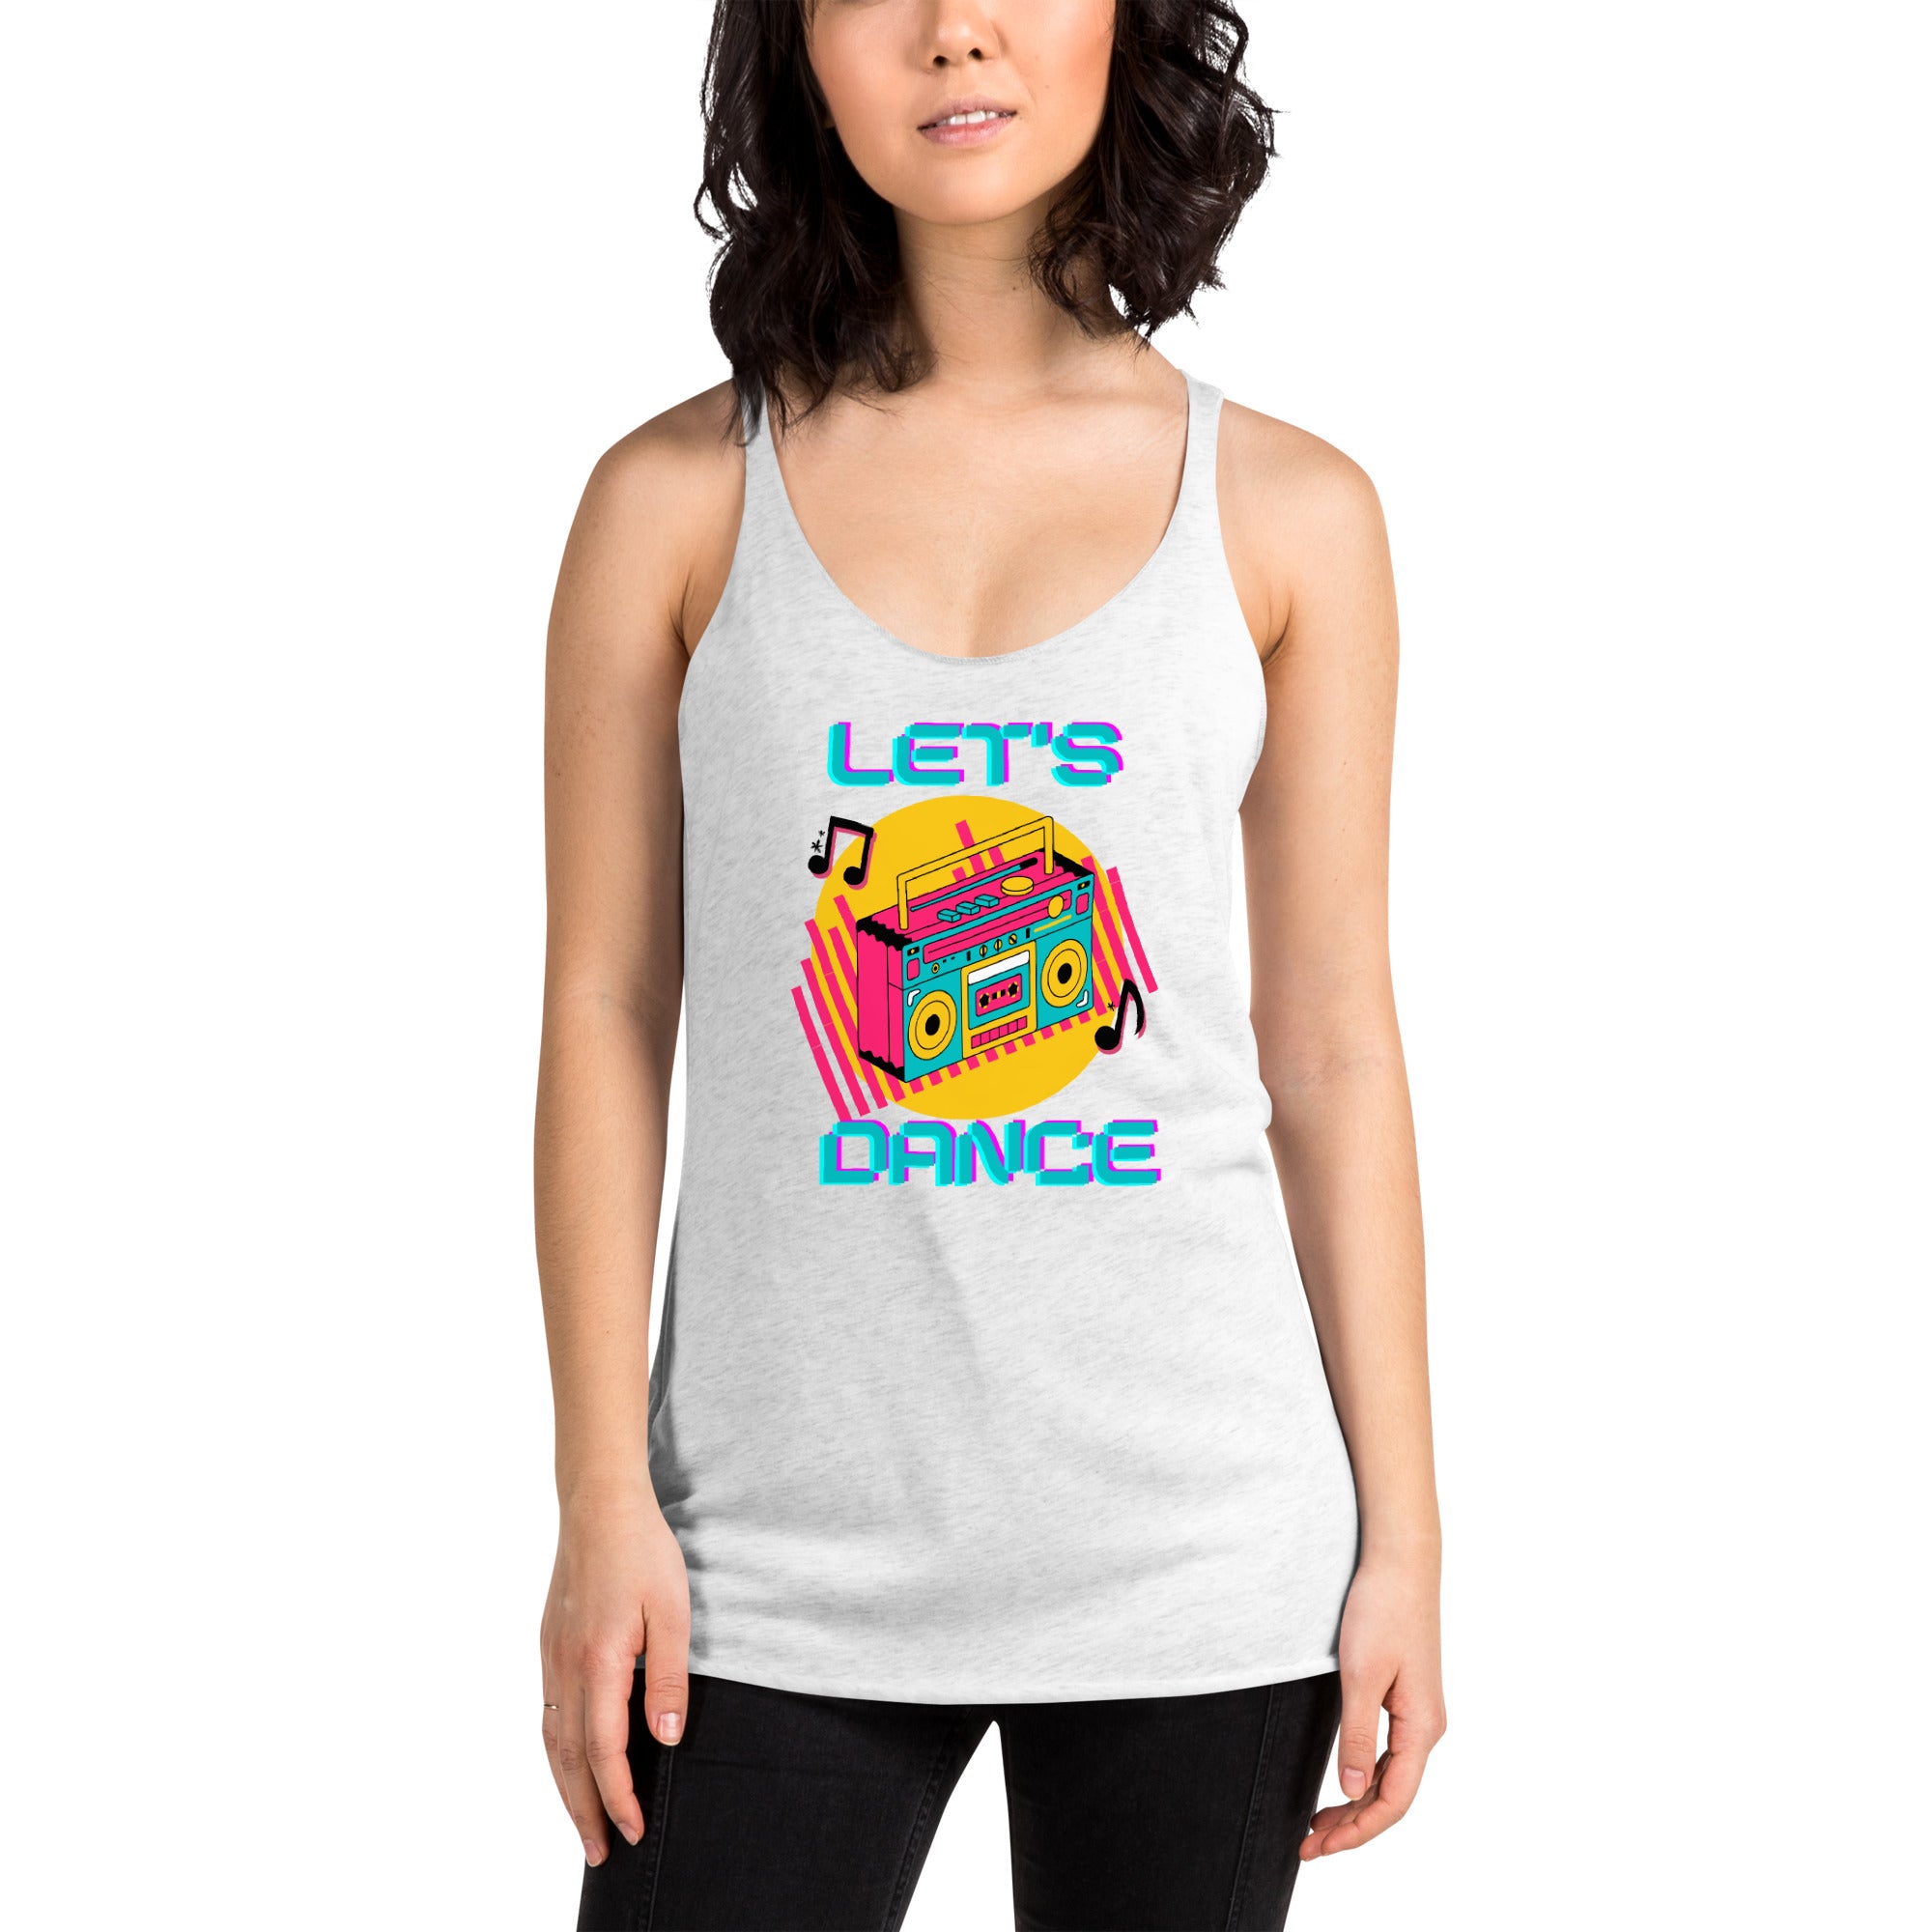 Let's Dance Women's Racerback Tank